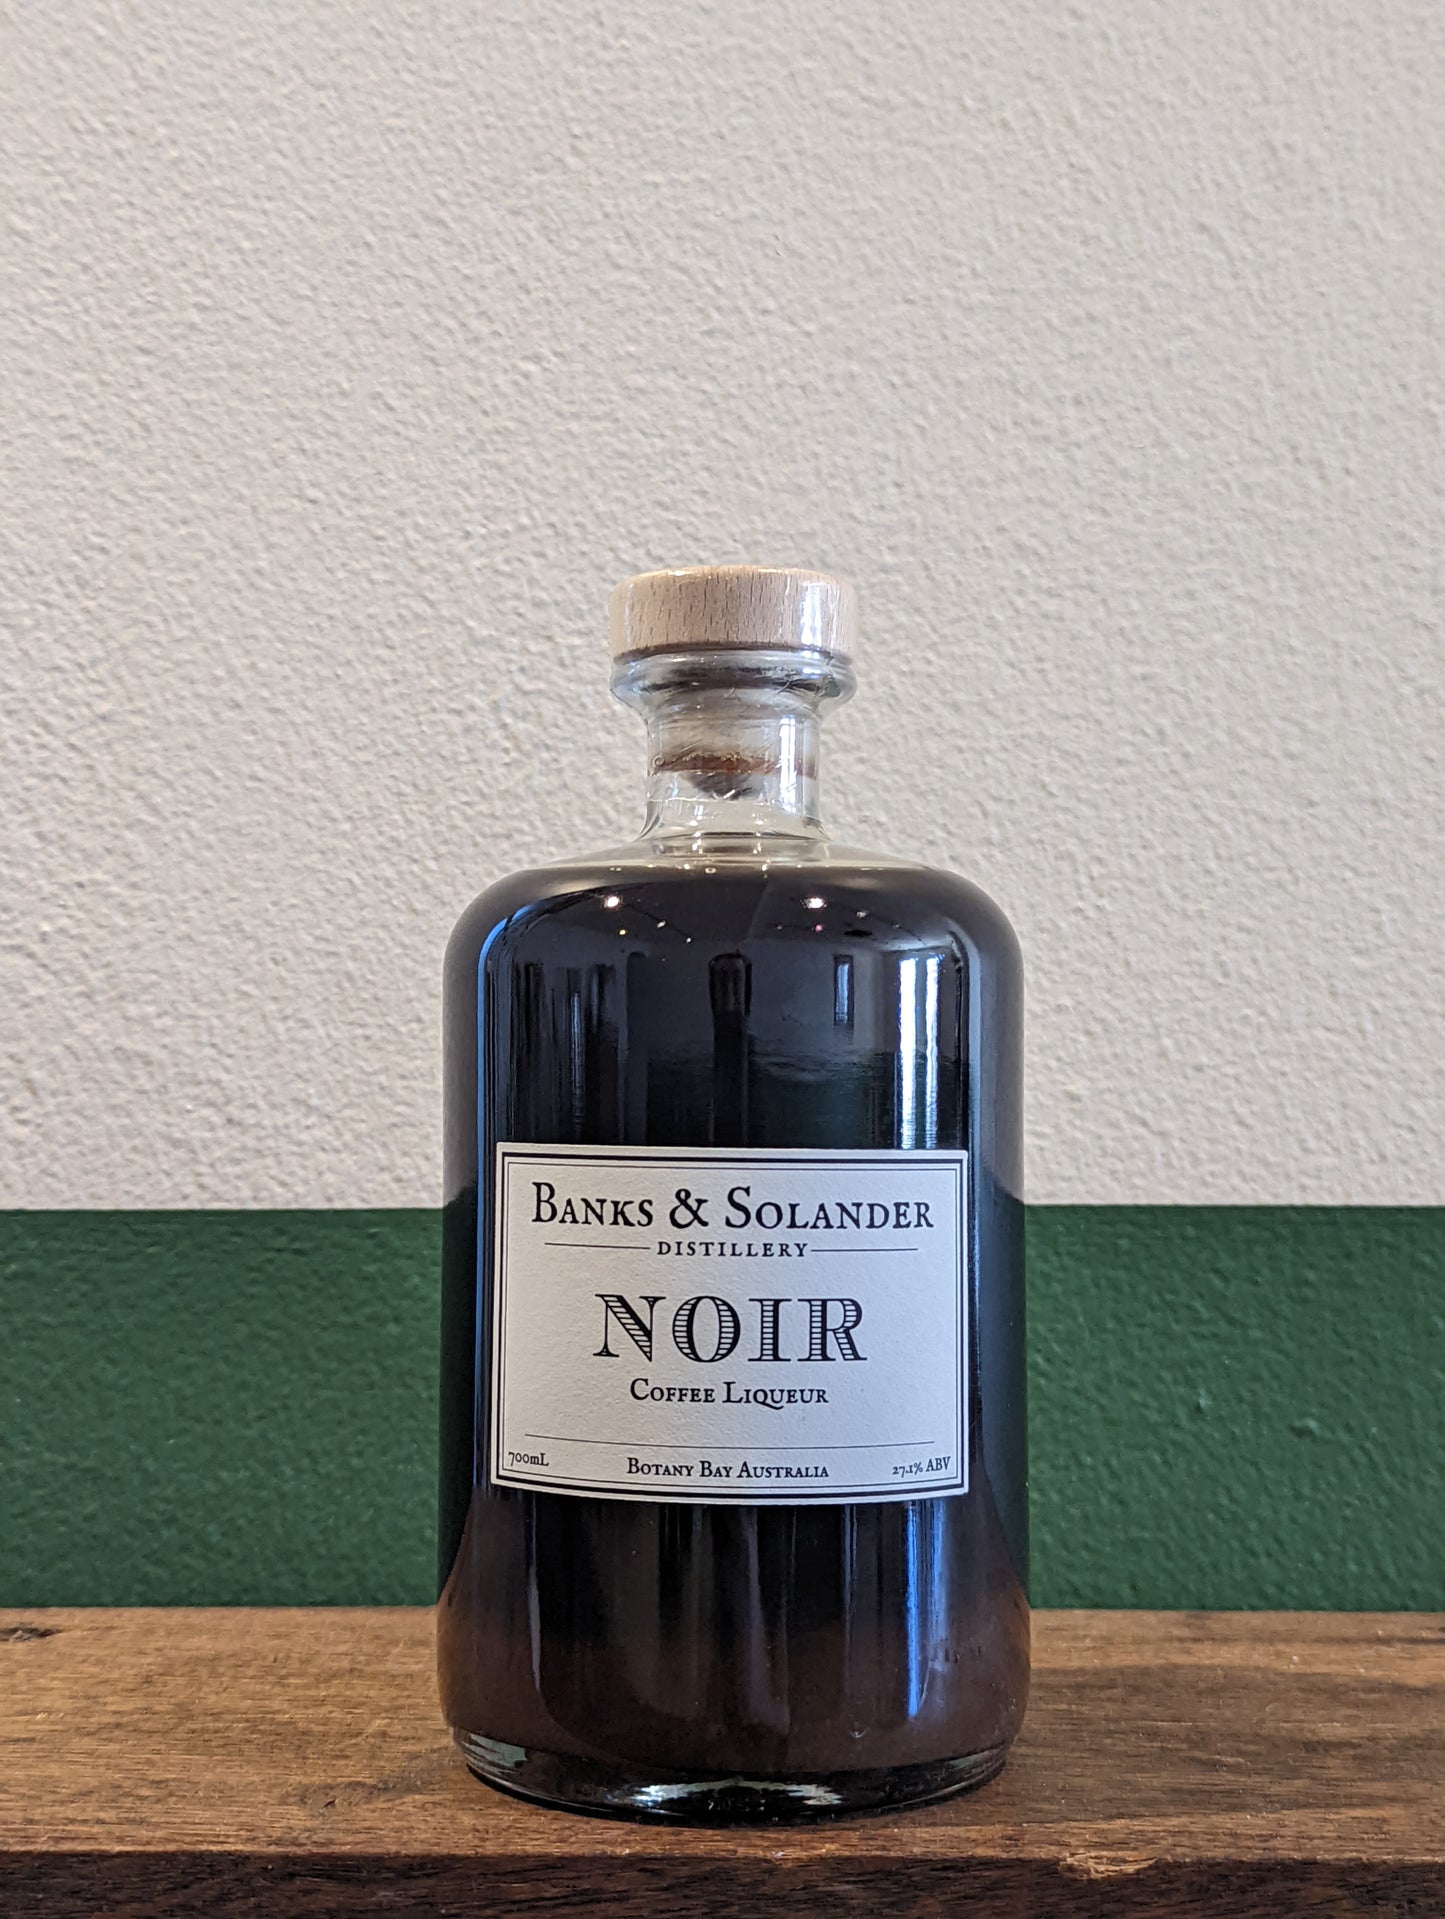 Banks & Solander - Noir Coffee Liqueur